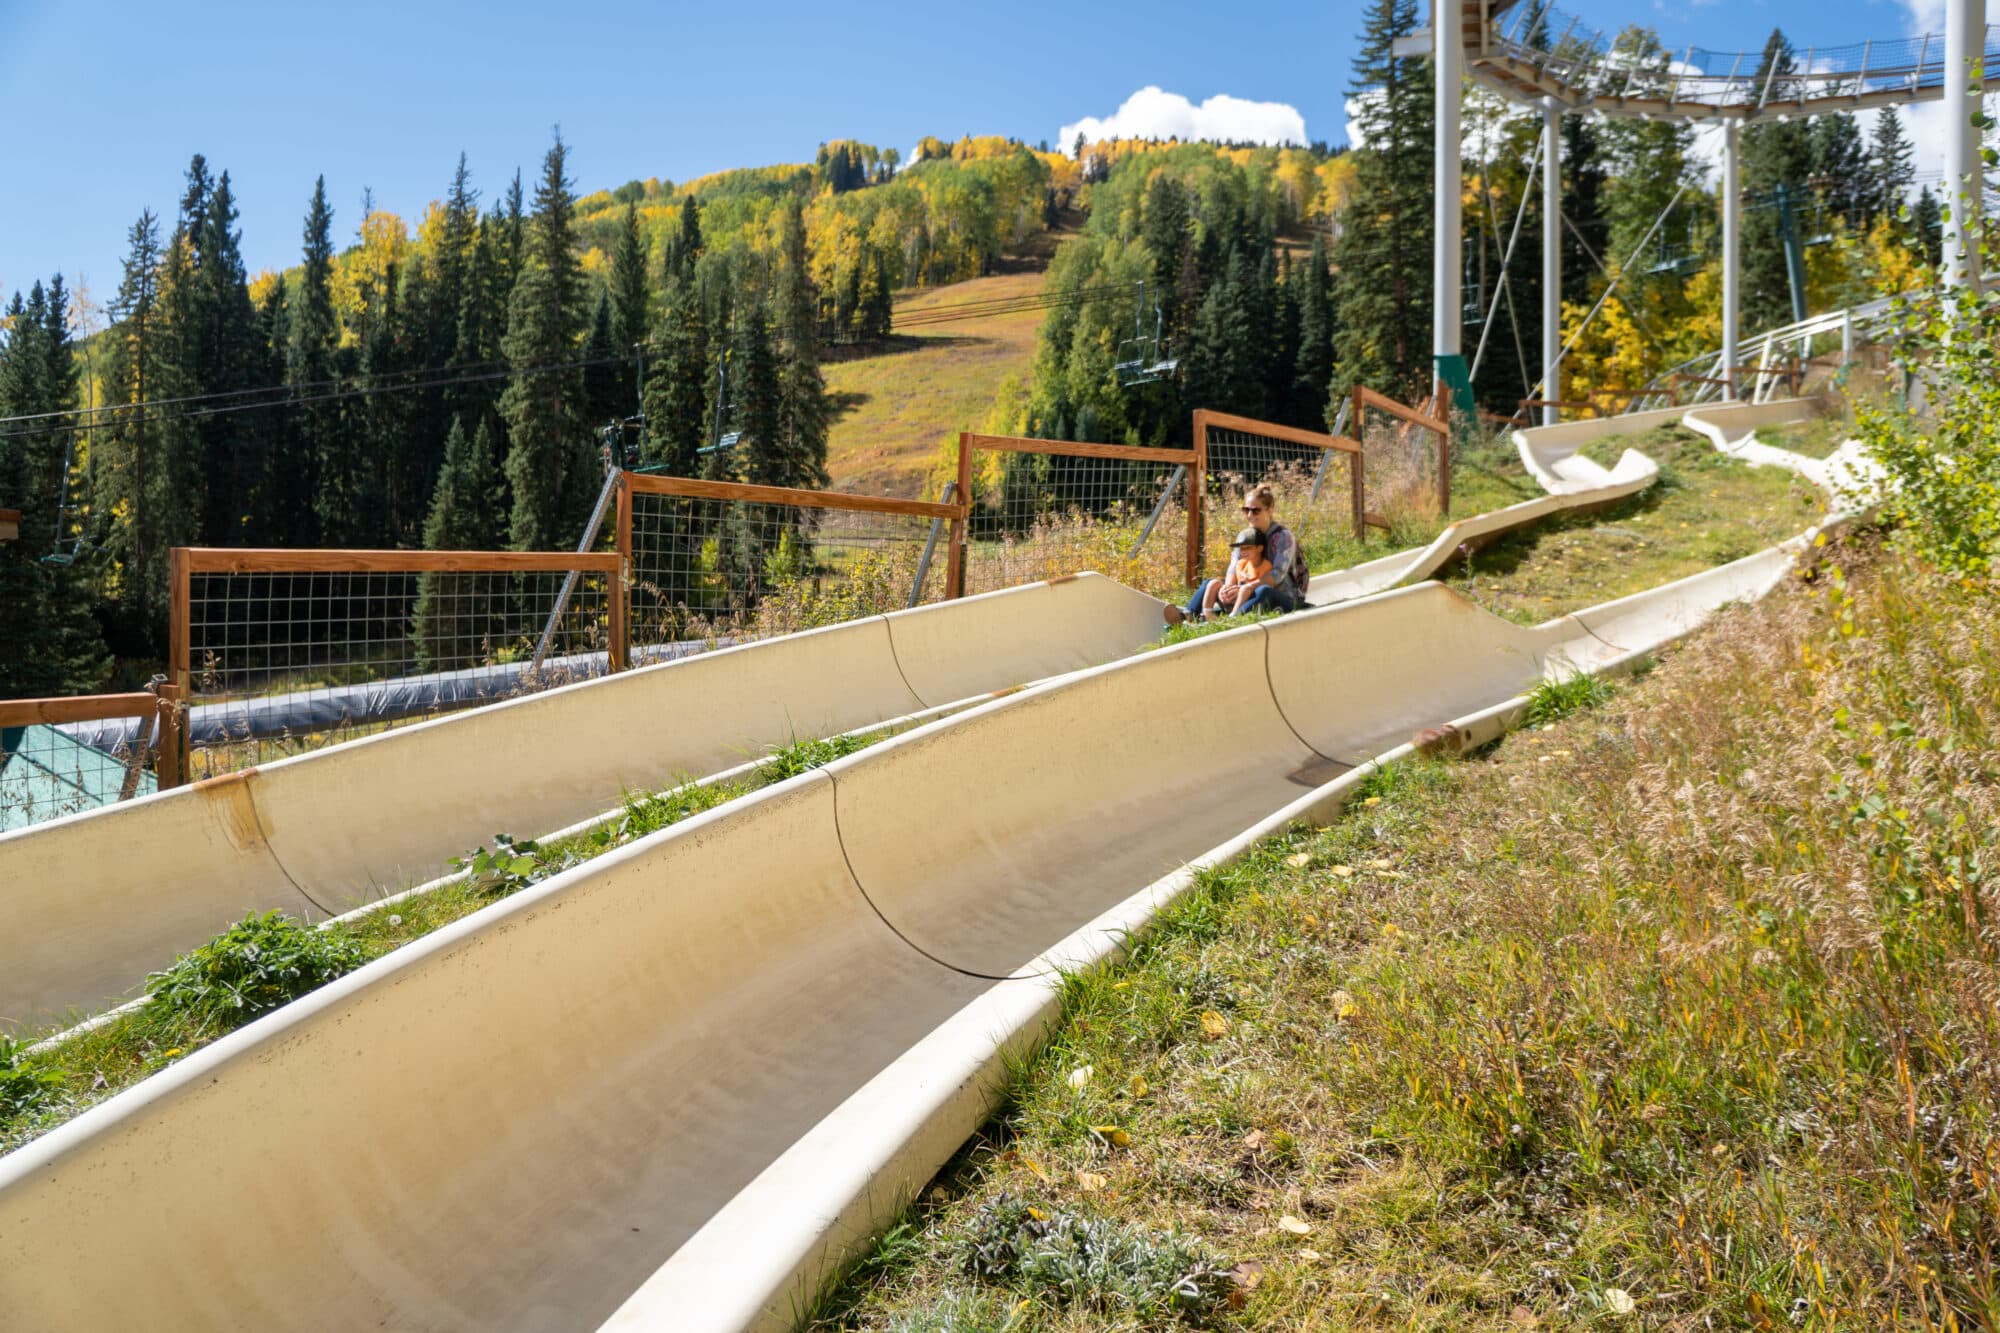 Alpine Slides in Colorado